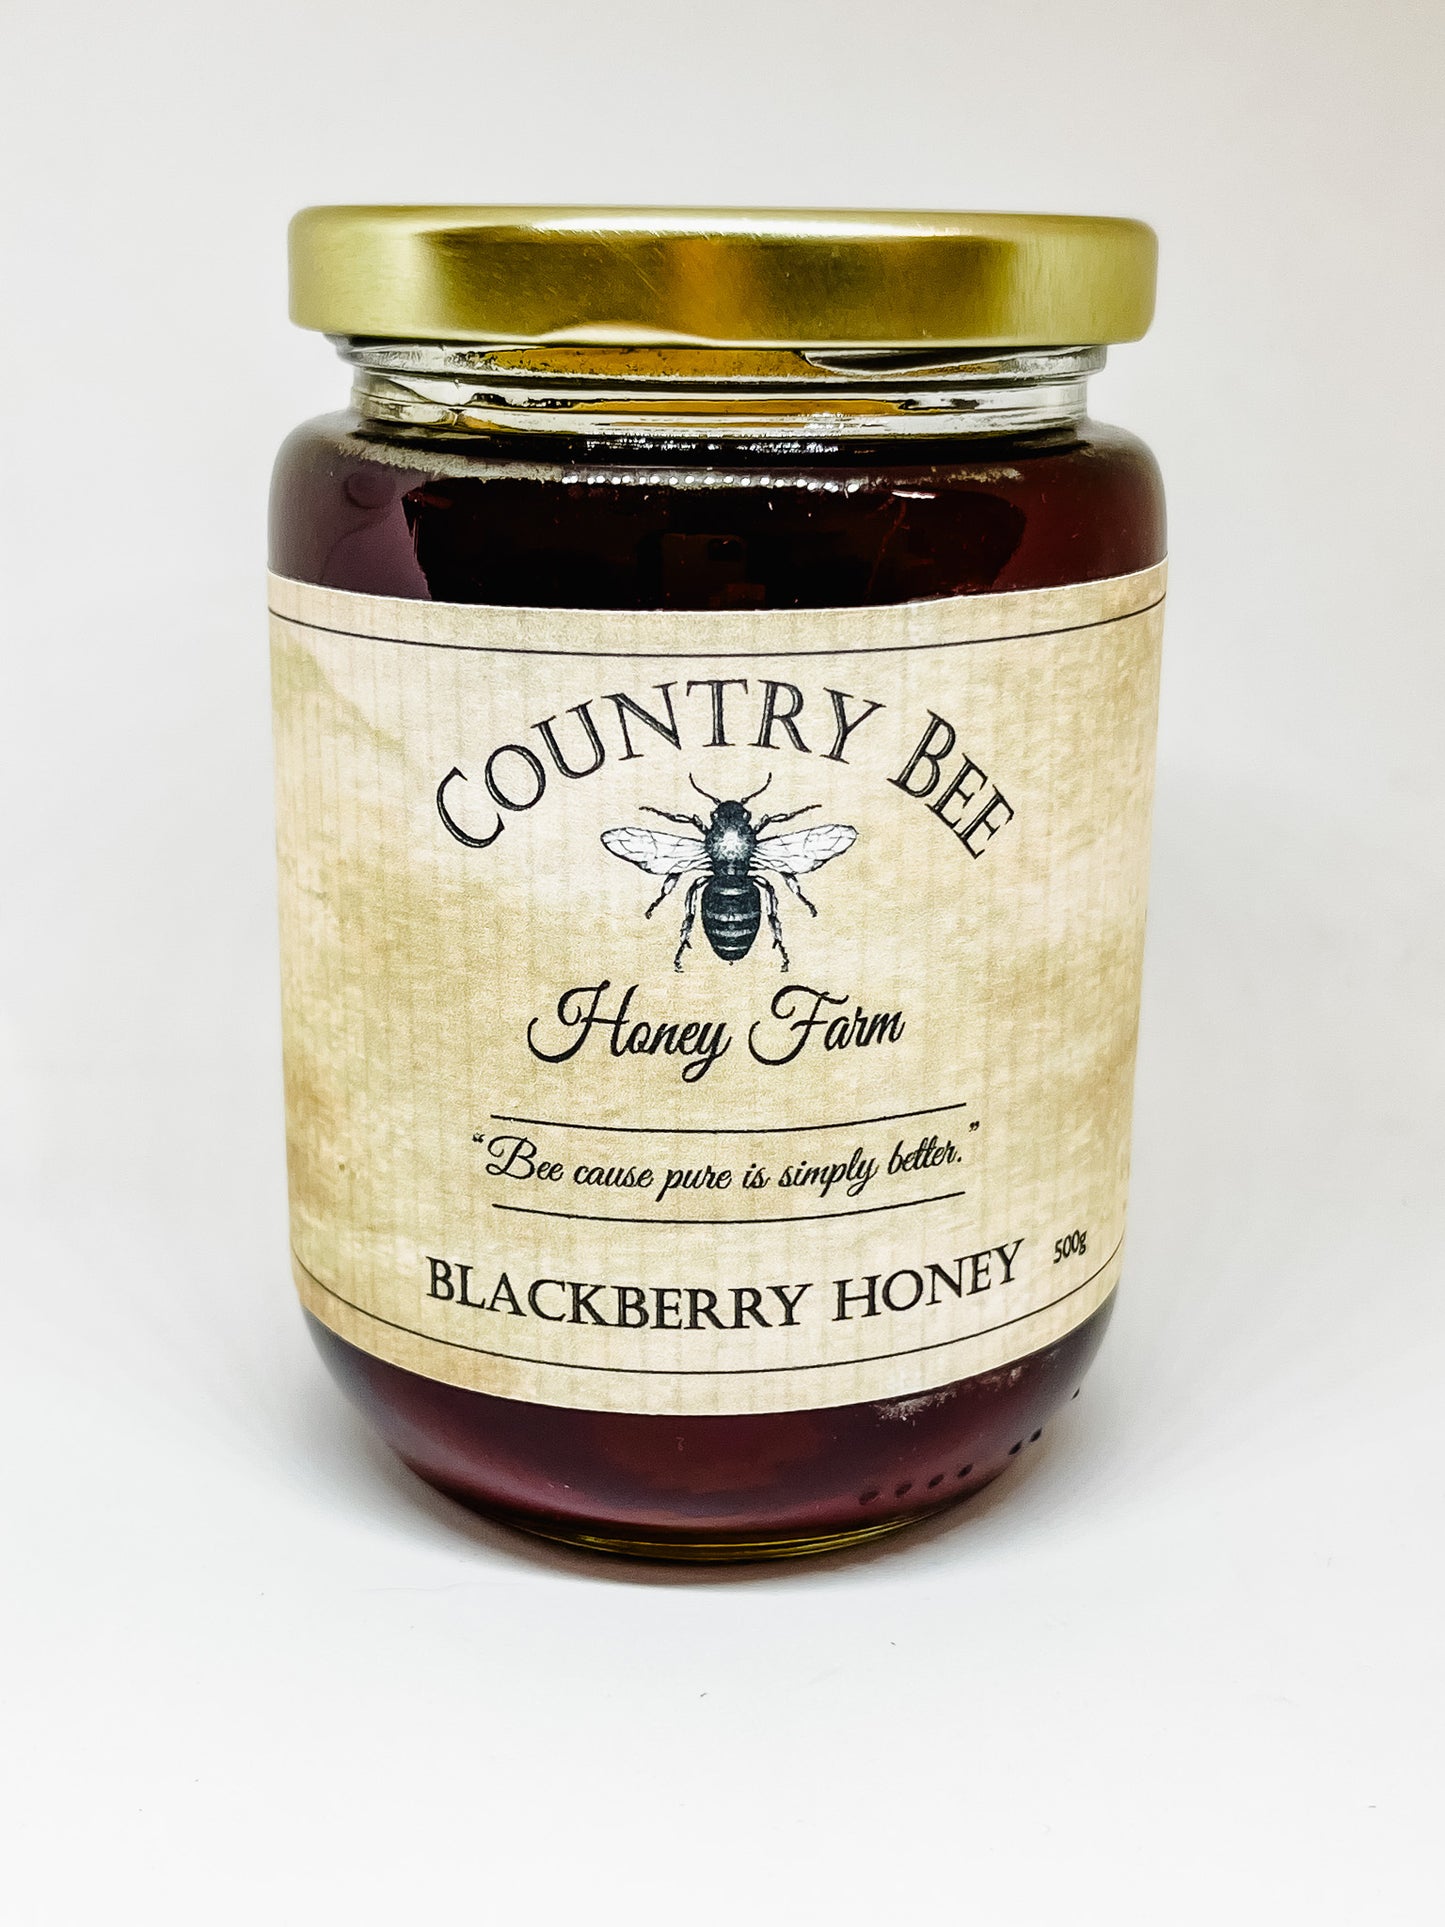 Blackberry Honey from Country Bee Honey Farm